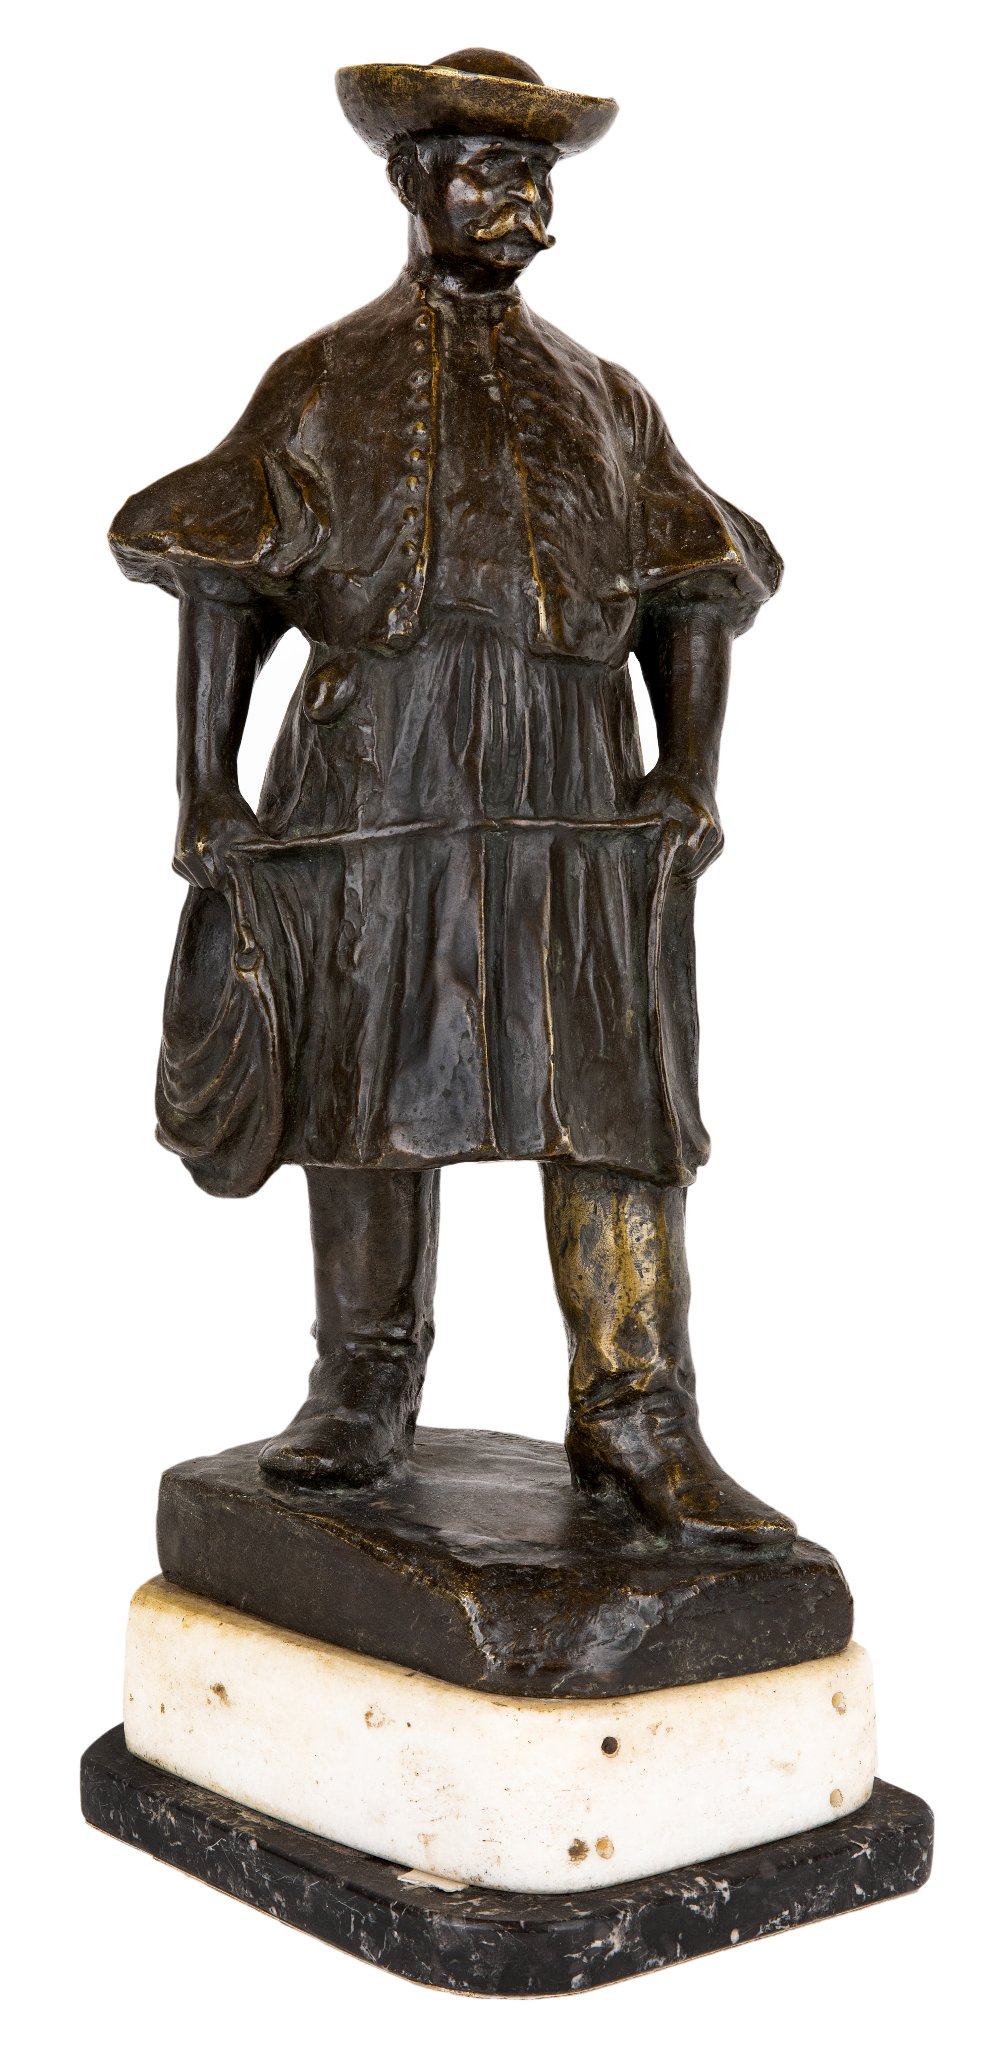 After Laslo Beszedes, Hungarian, 1874-1922, Csikós (Horse-herdsman), a bronze figure of a